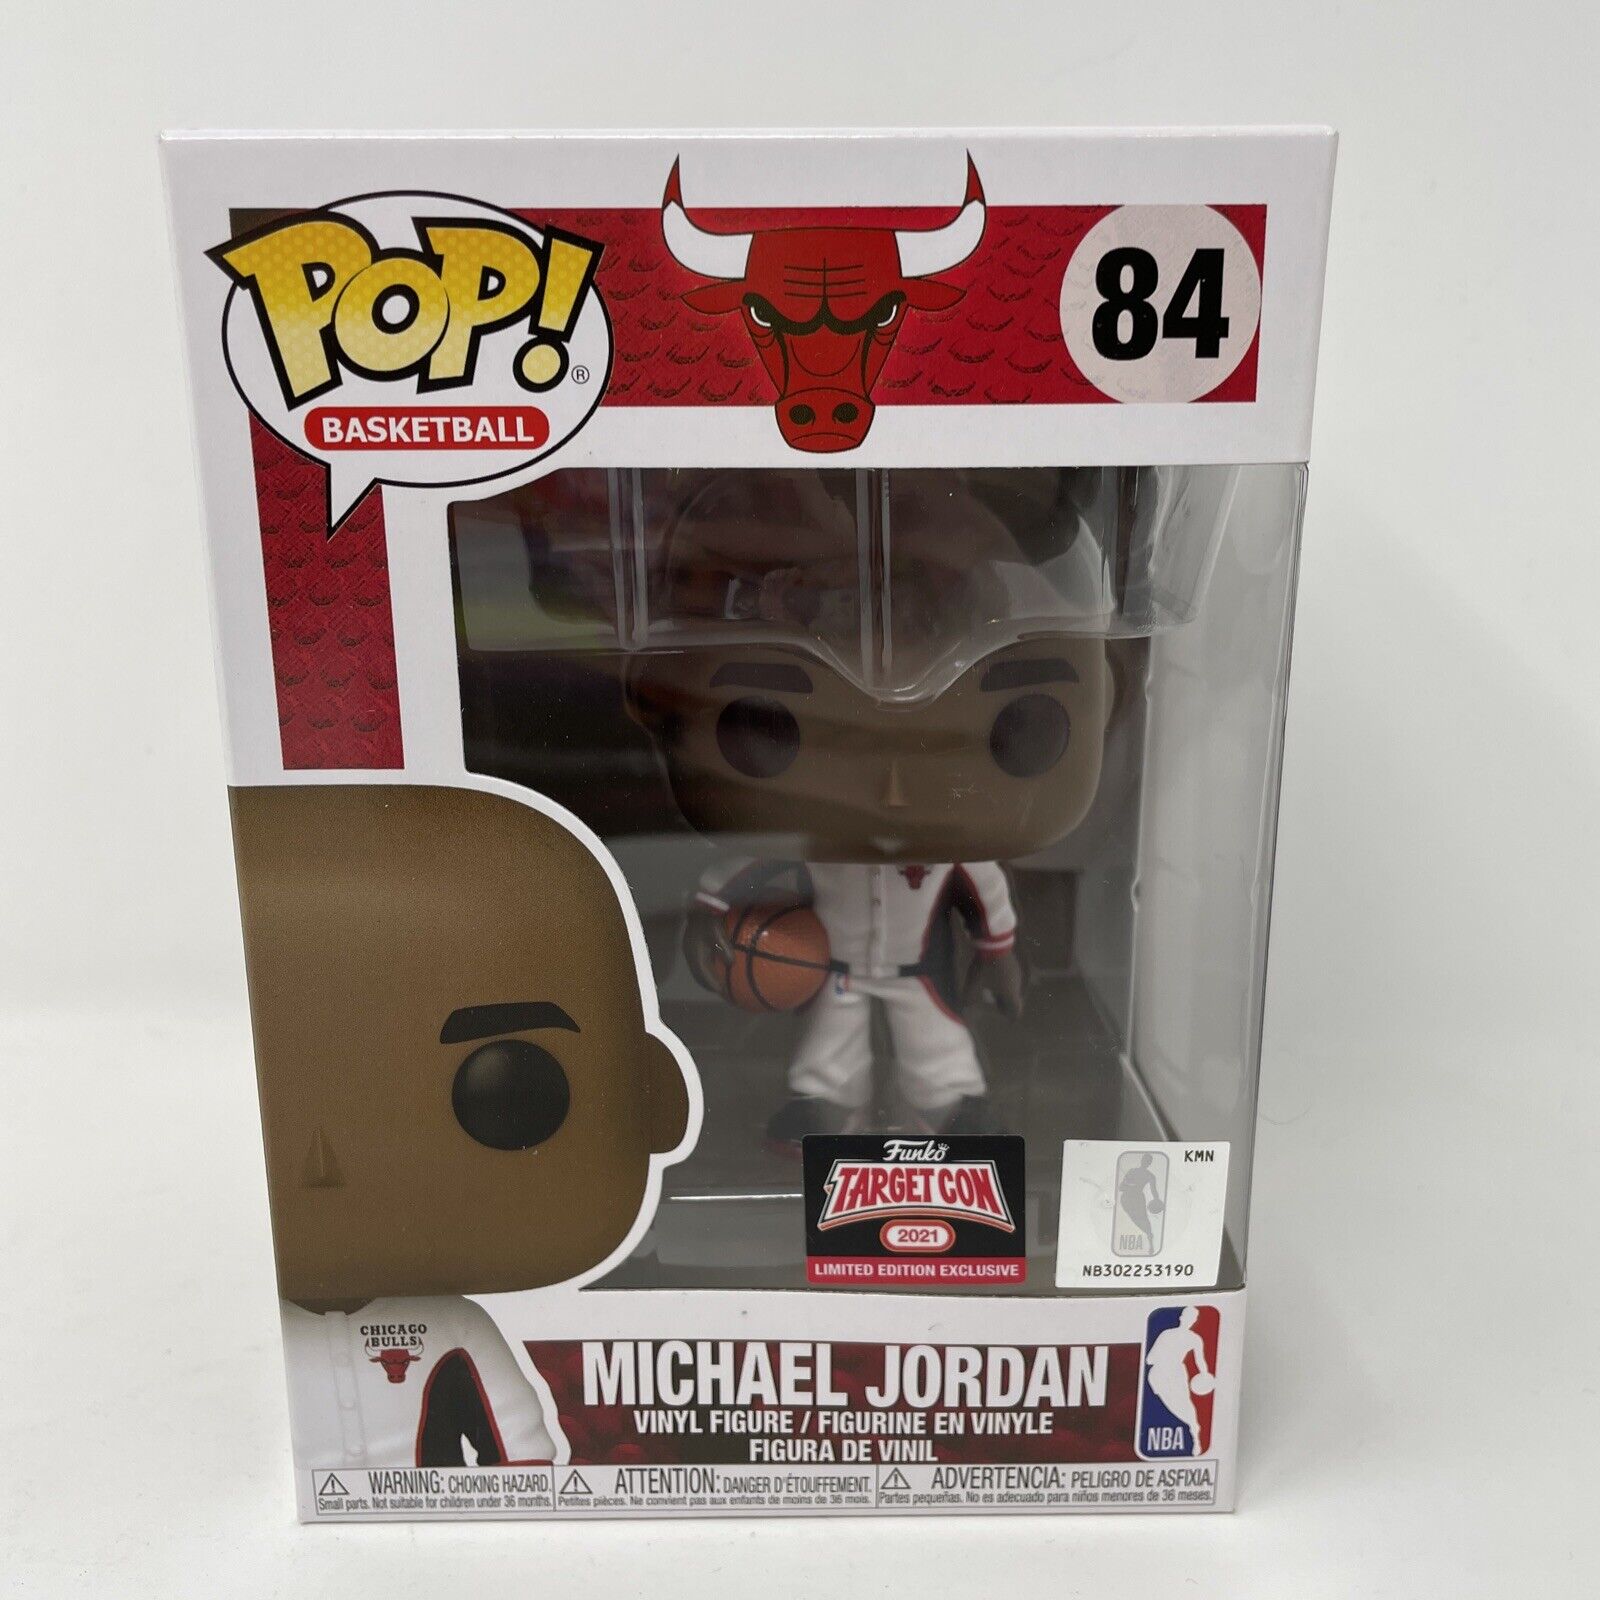 Funko Pop Basketball Target Con 2021 Michael Jordan 84 with Protector 